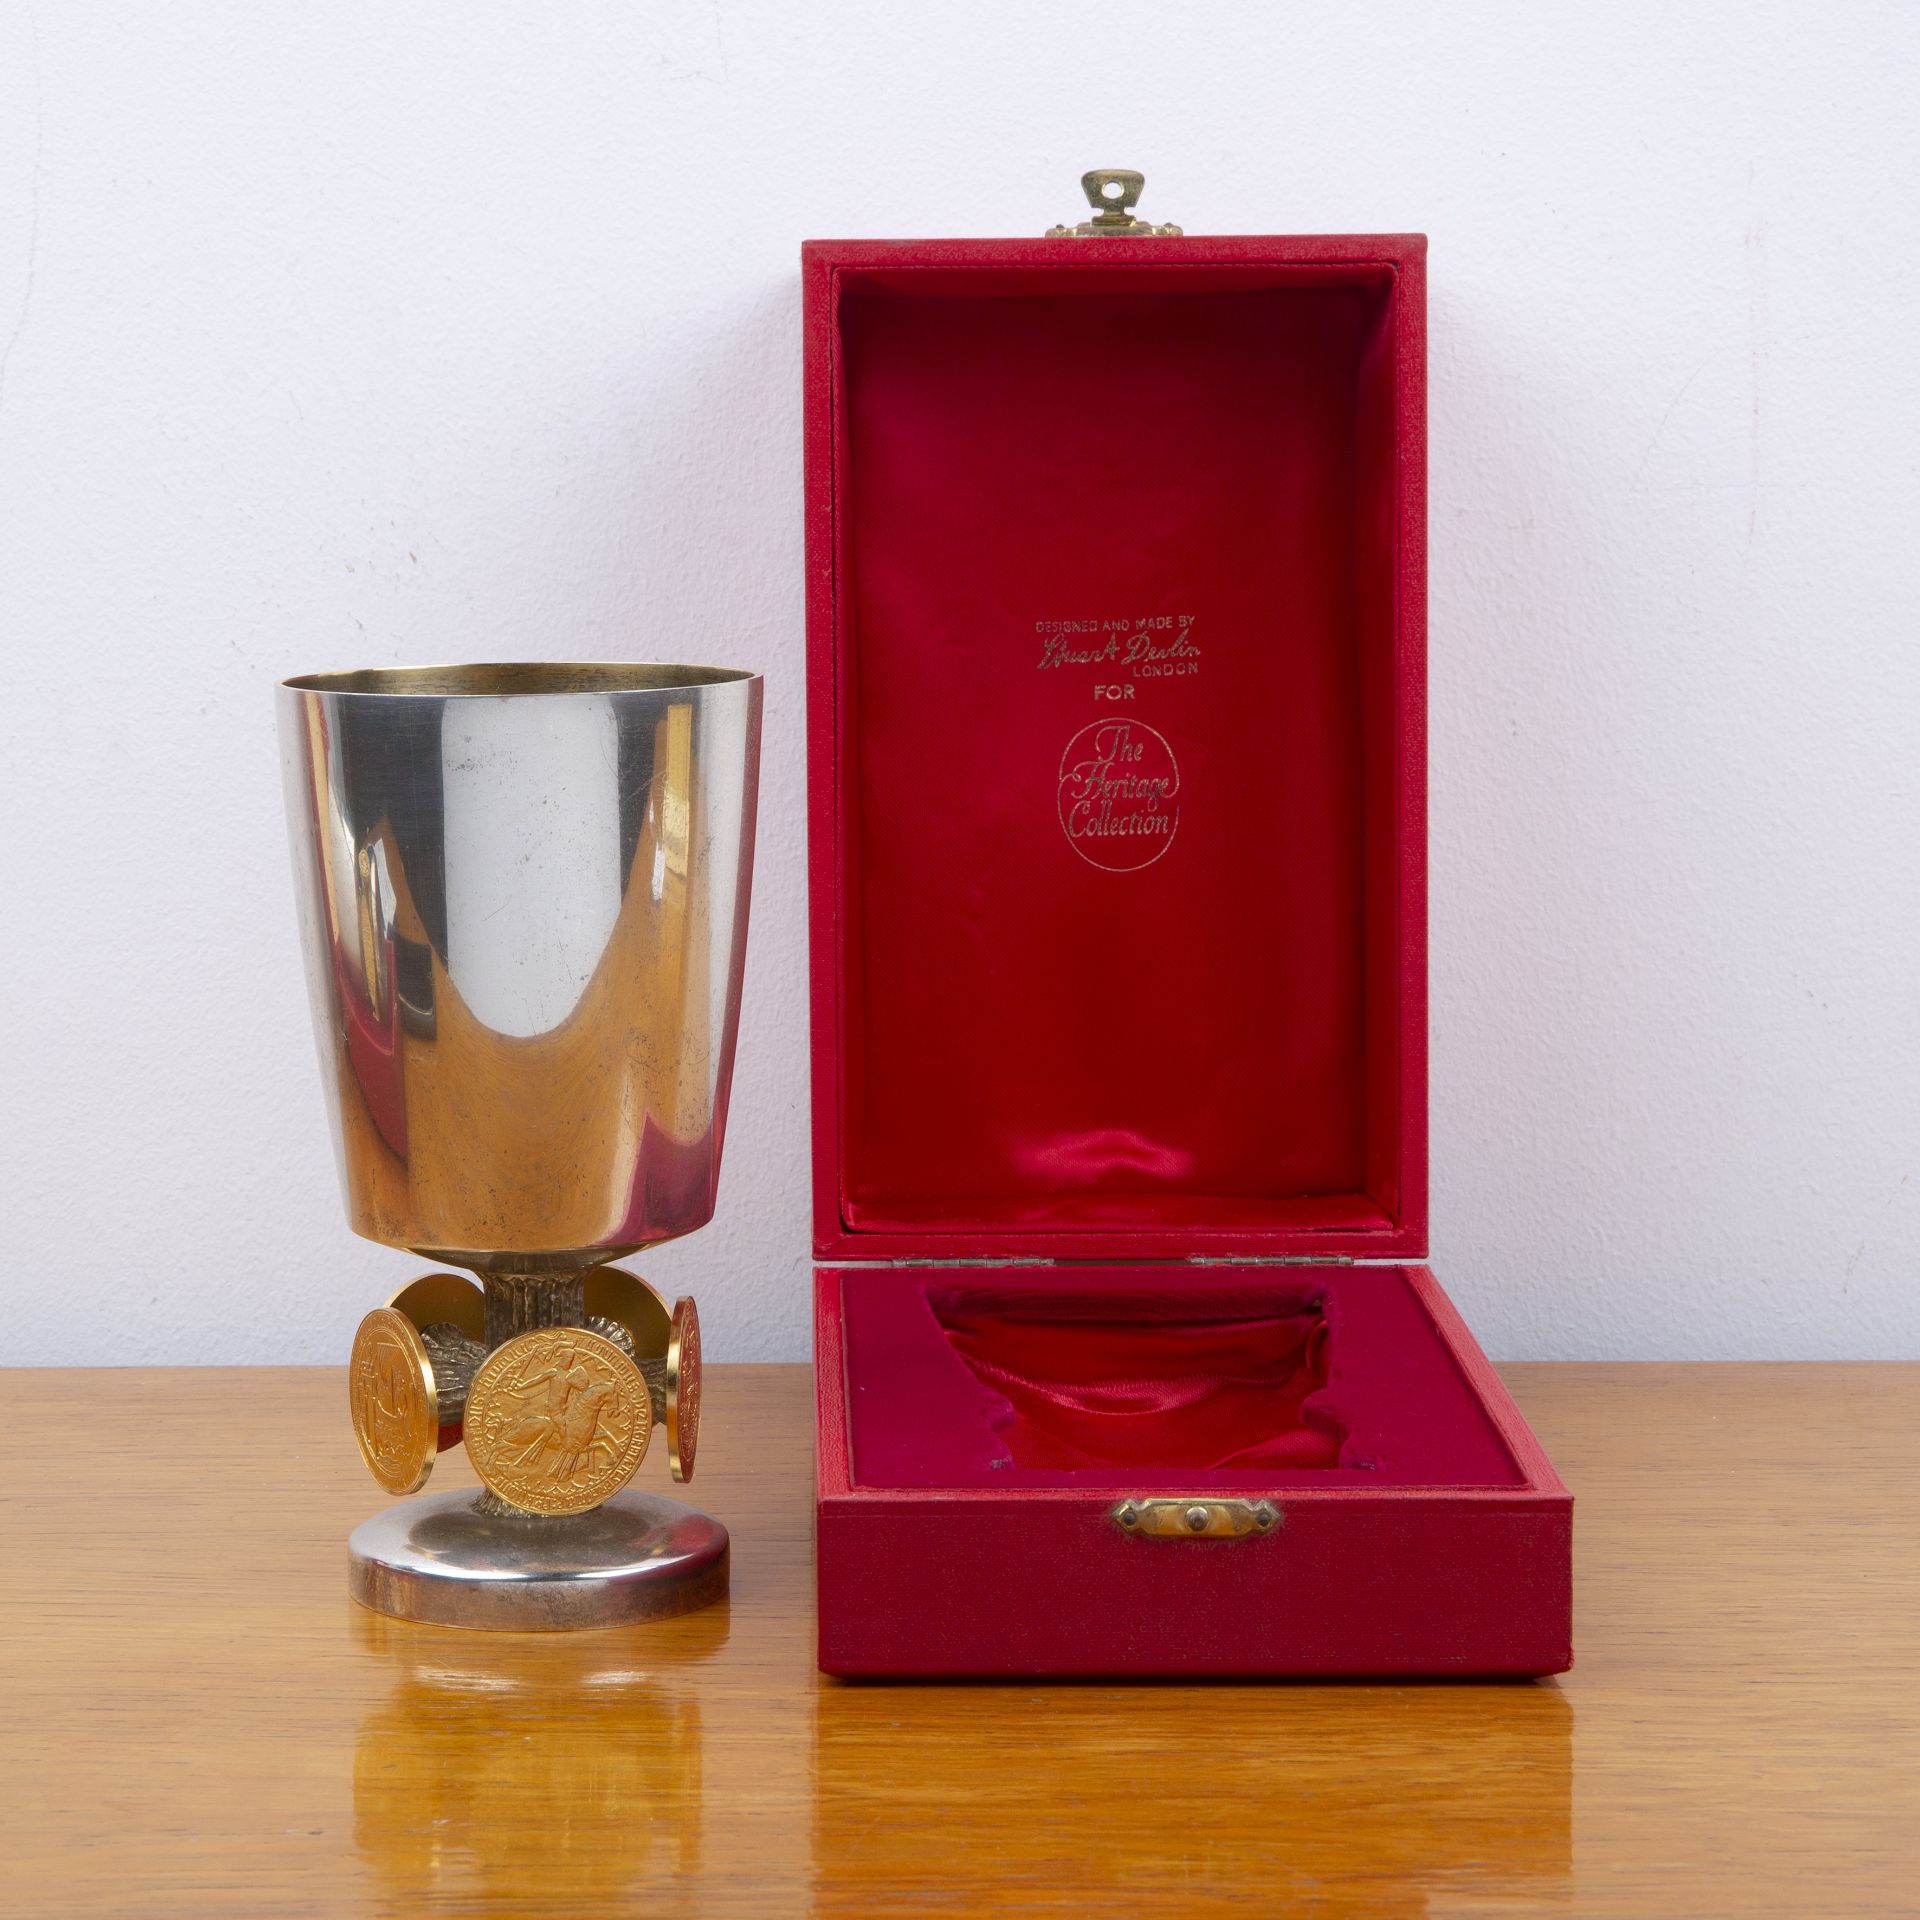 Stuart Devlin (1931-2018) cased silver and silver gilt 'Bristol 600 Goblet', number 337/600, with